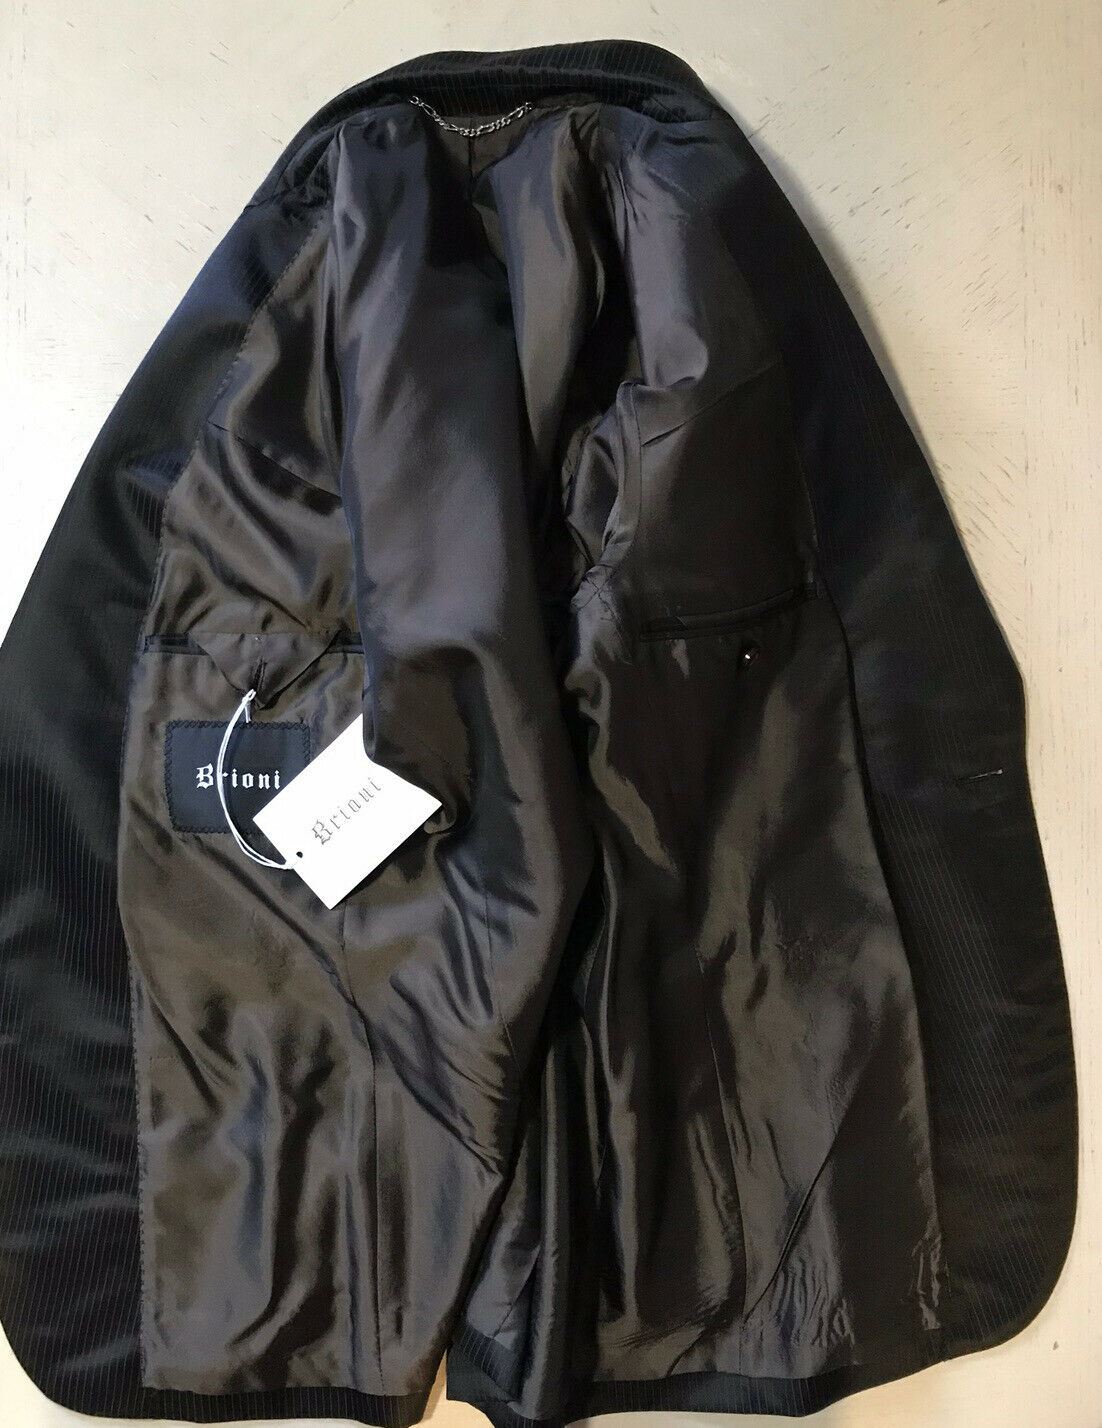 New $6750 Brioni Classic Suit 3 Piece Continenta DK Brown/Black 38R US/48 Eu